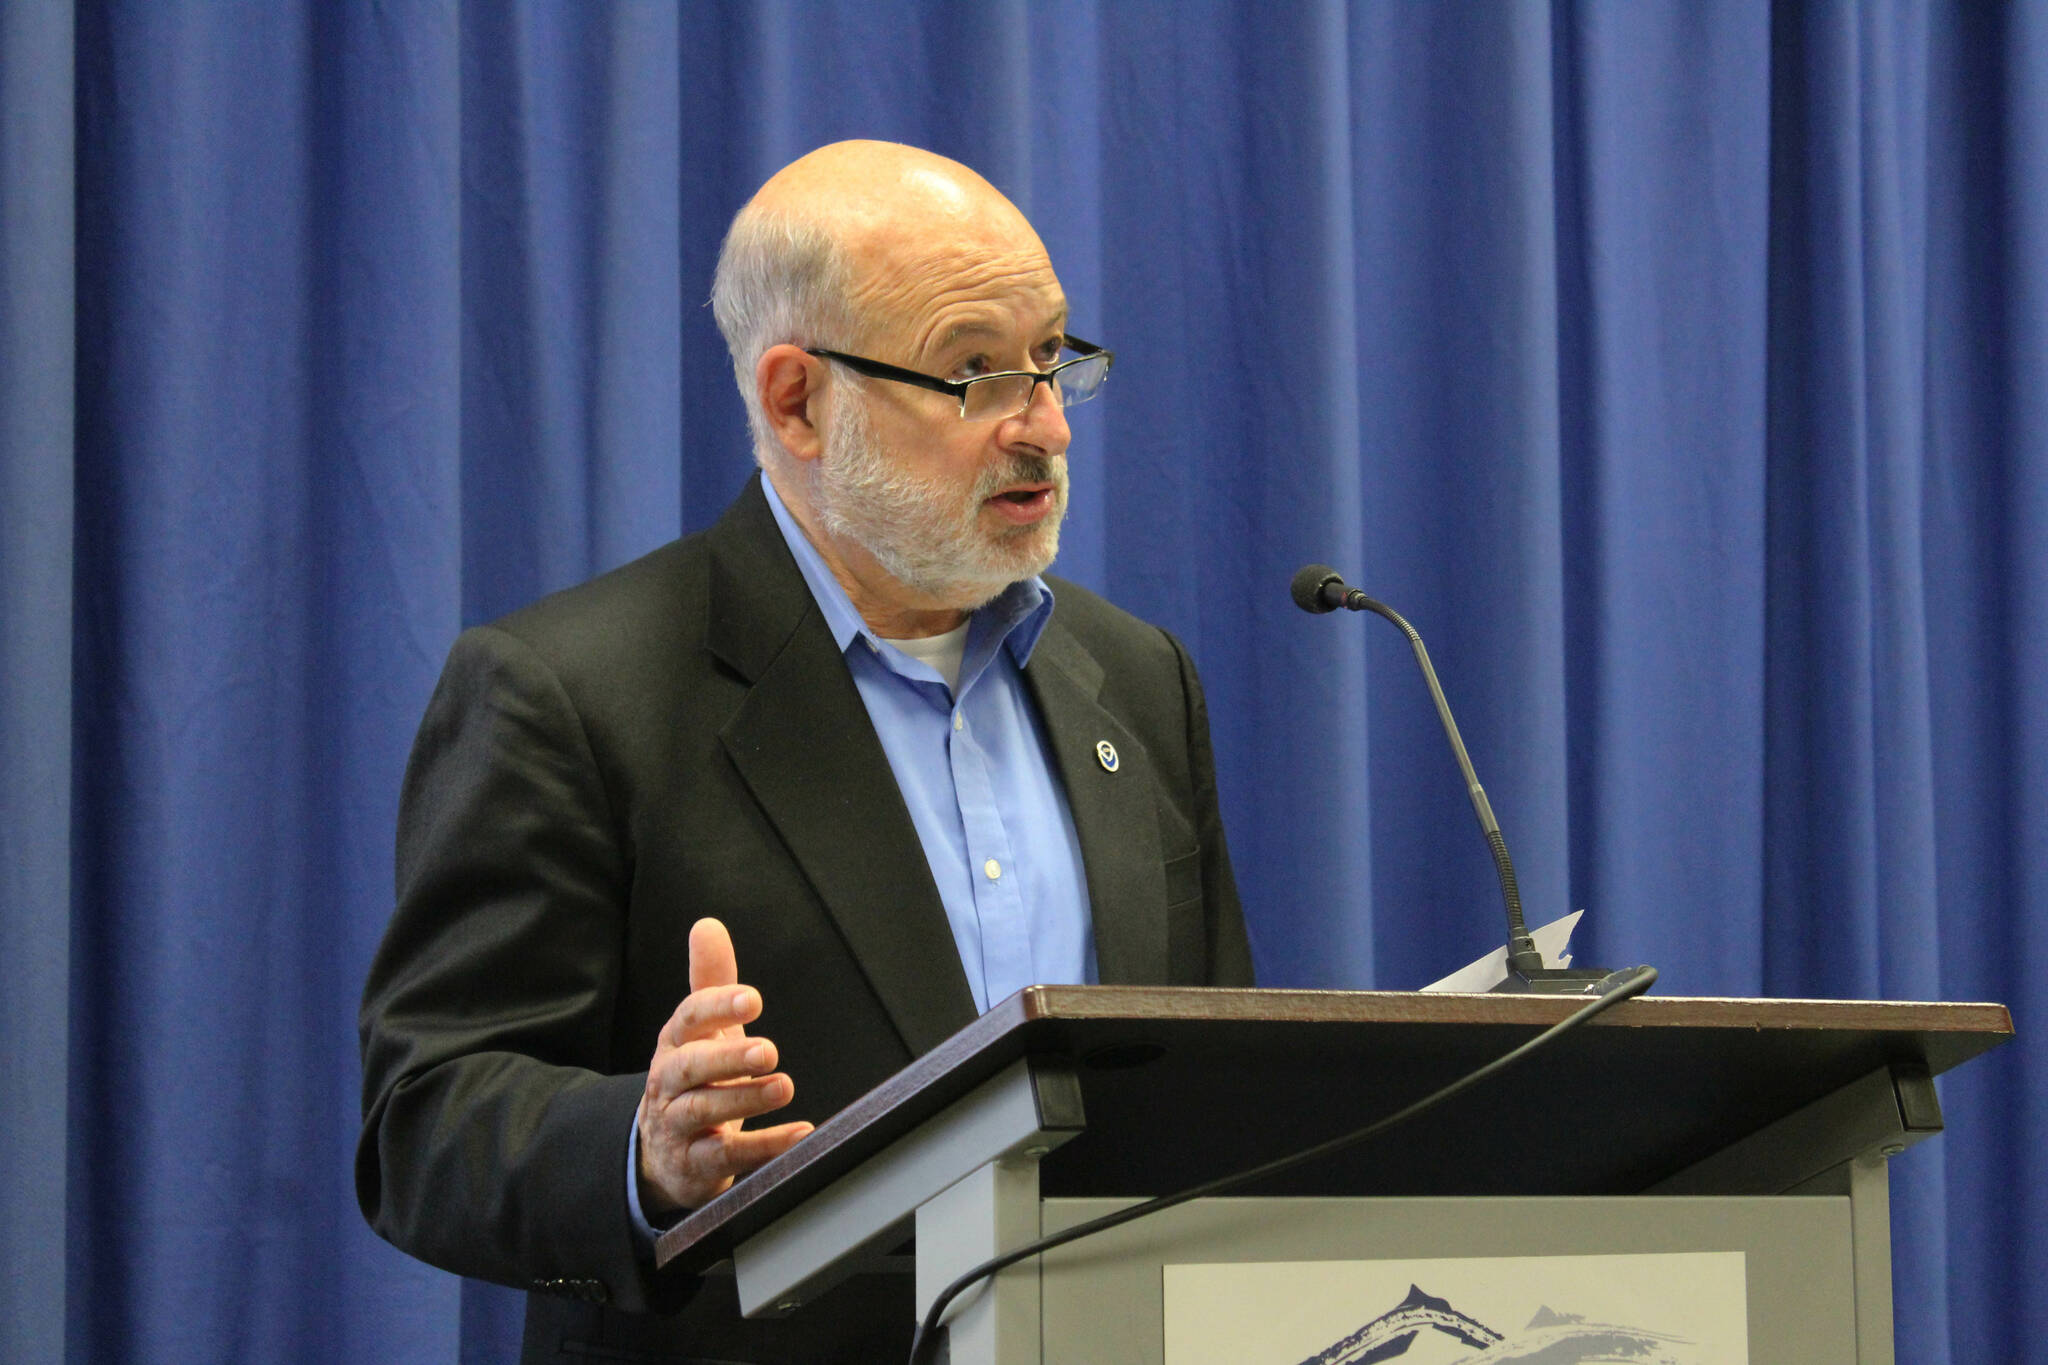 NOAA Administrator Dr. Richard Spinrad speaks at the Kenai Classic Roundtable at Kenai Peninsula College on Wednesday, Aug. 17, 2022 near Soldotna, Alaska. (Ashlyn O’Hara/Peninsula Clarion)